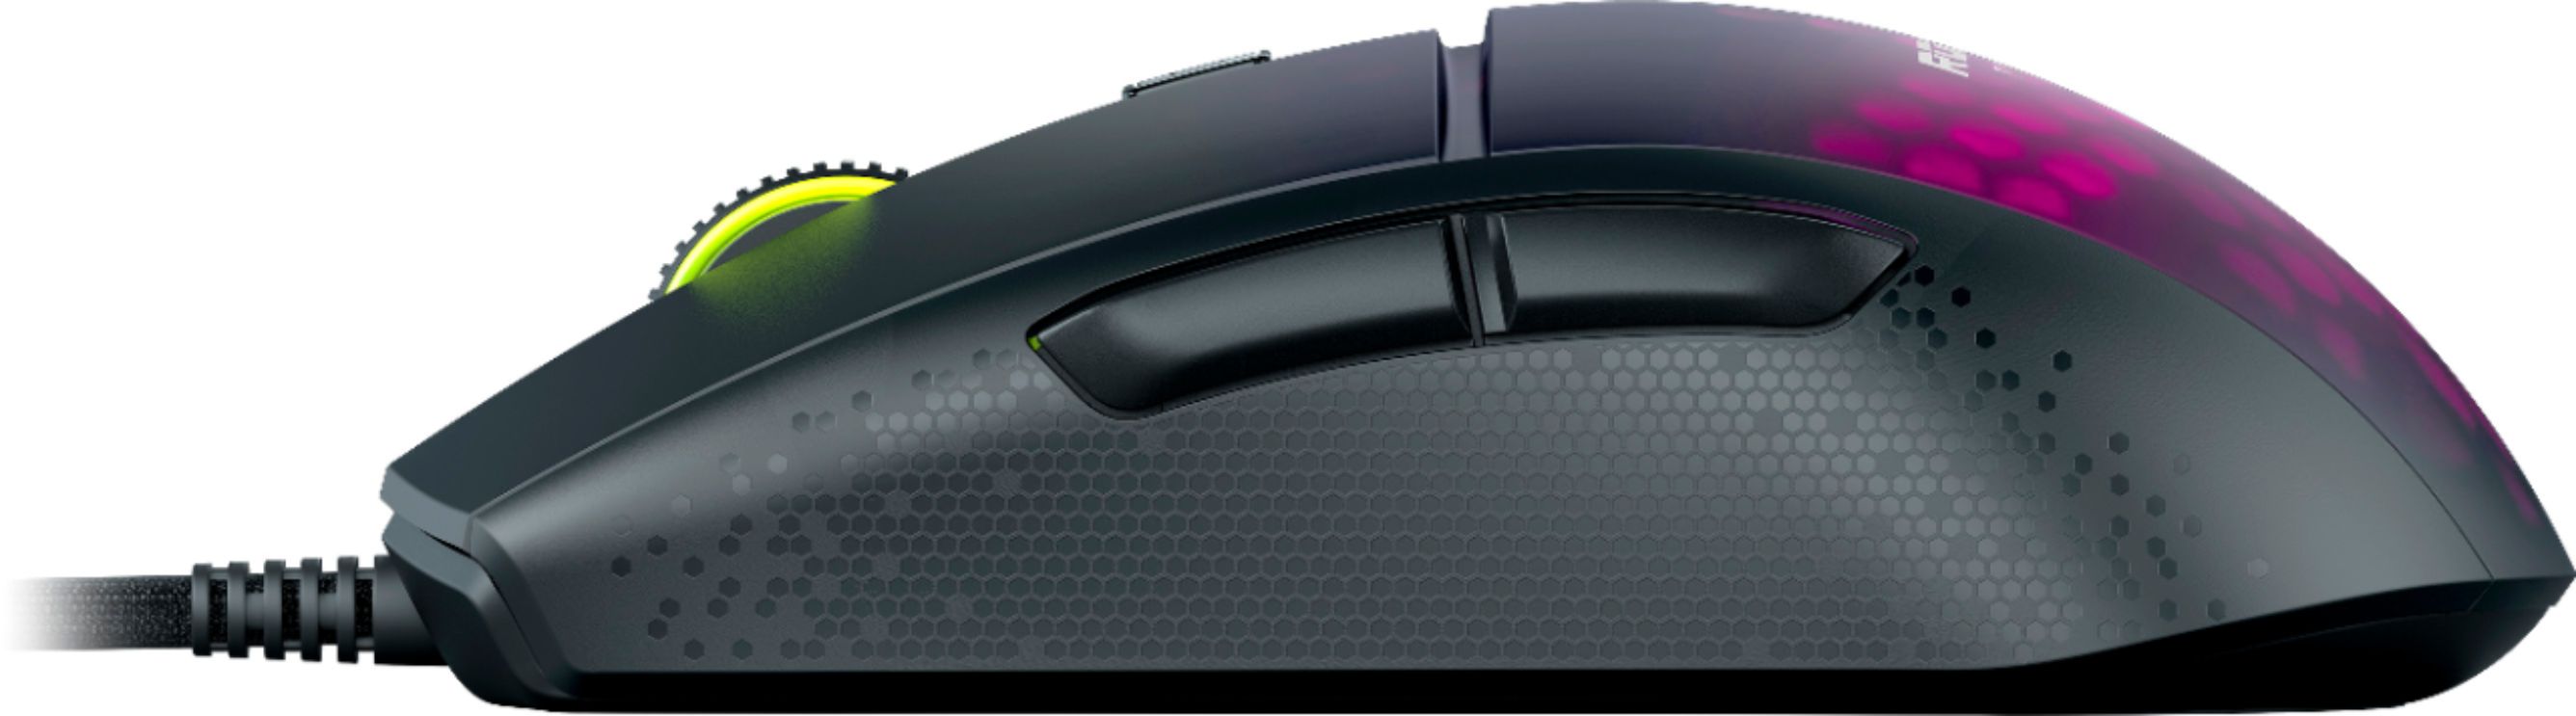 ROCCAT Burst Pro Air Lightweight Symmetrical, Wireless RGB Gaming Mouse  with 19K DPI Optical Owl-Eye Sensor, Optical Switches, Titan Wheel, 81-Gram